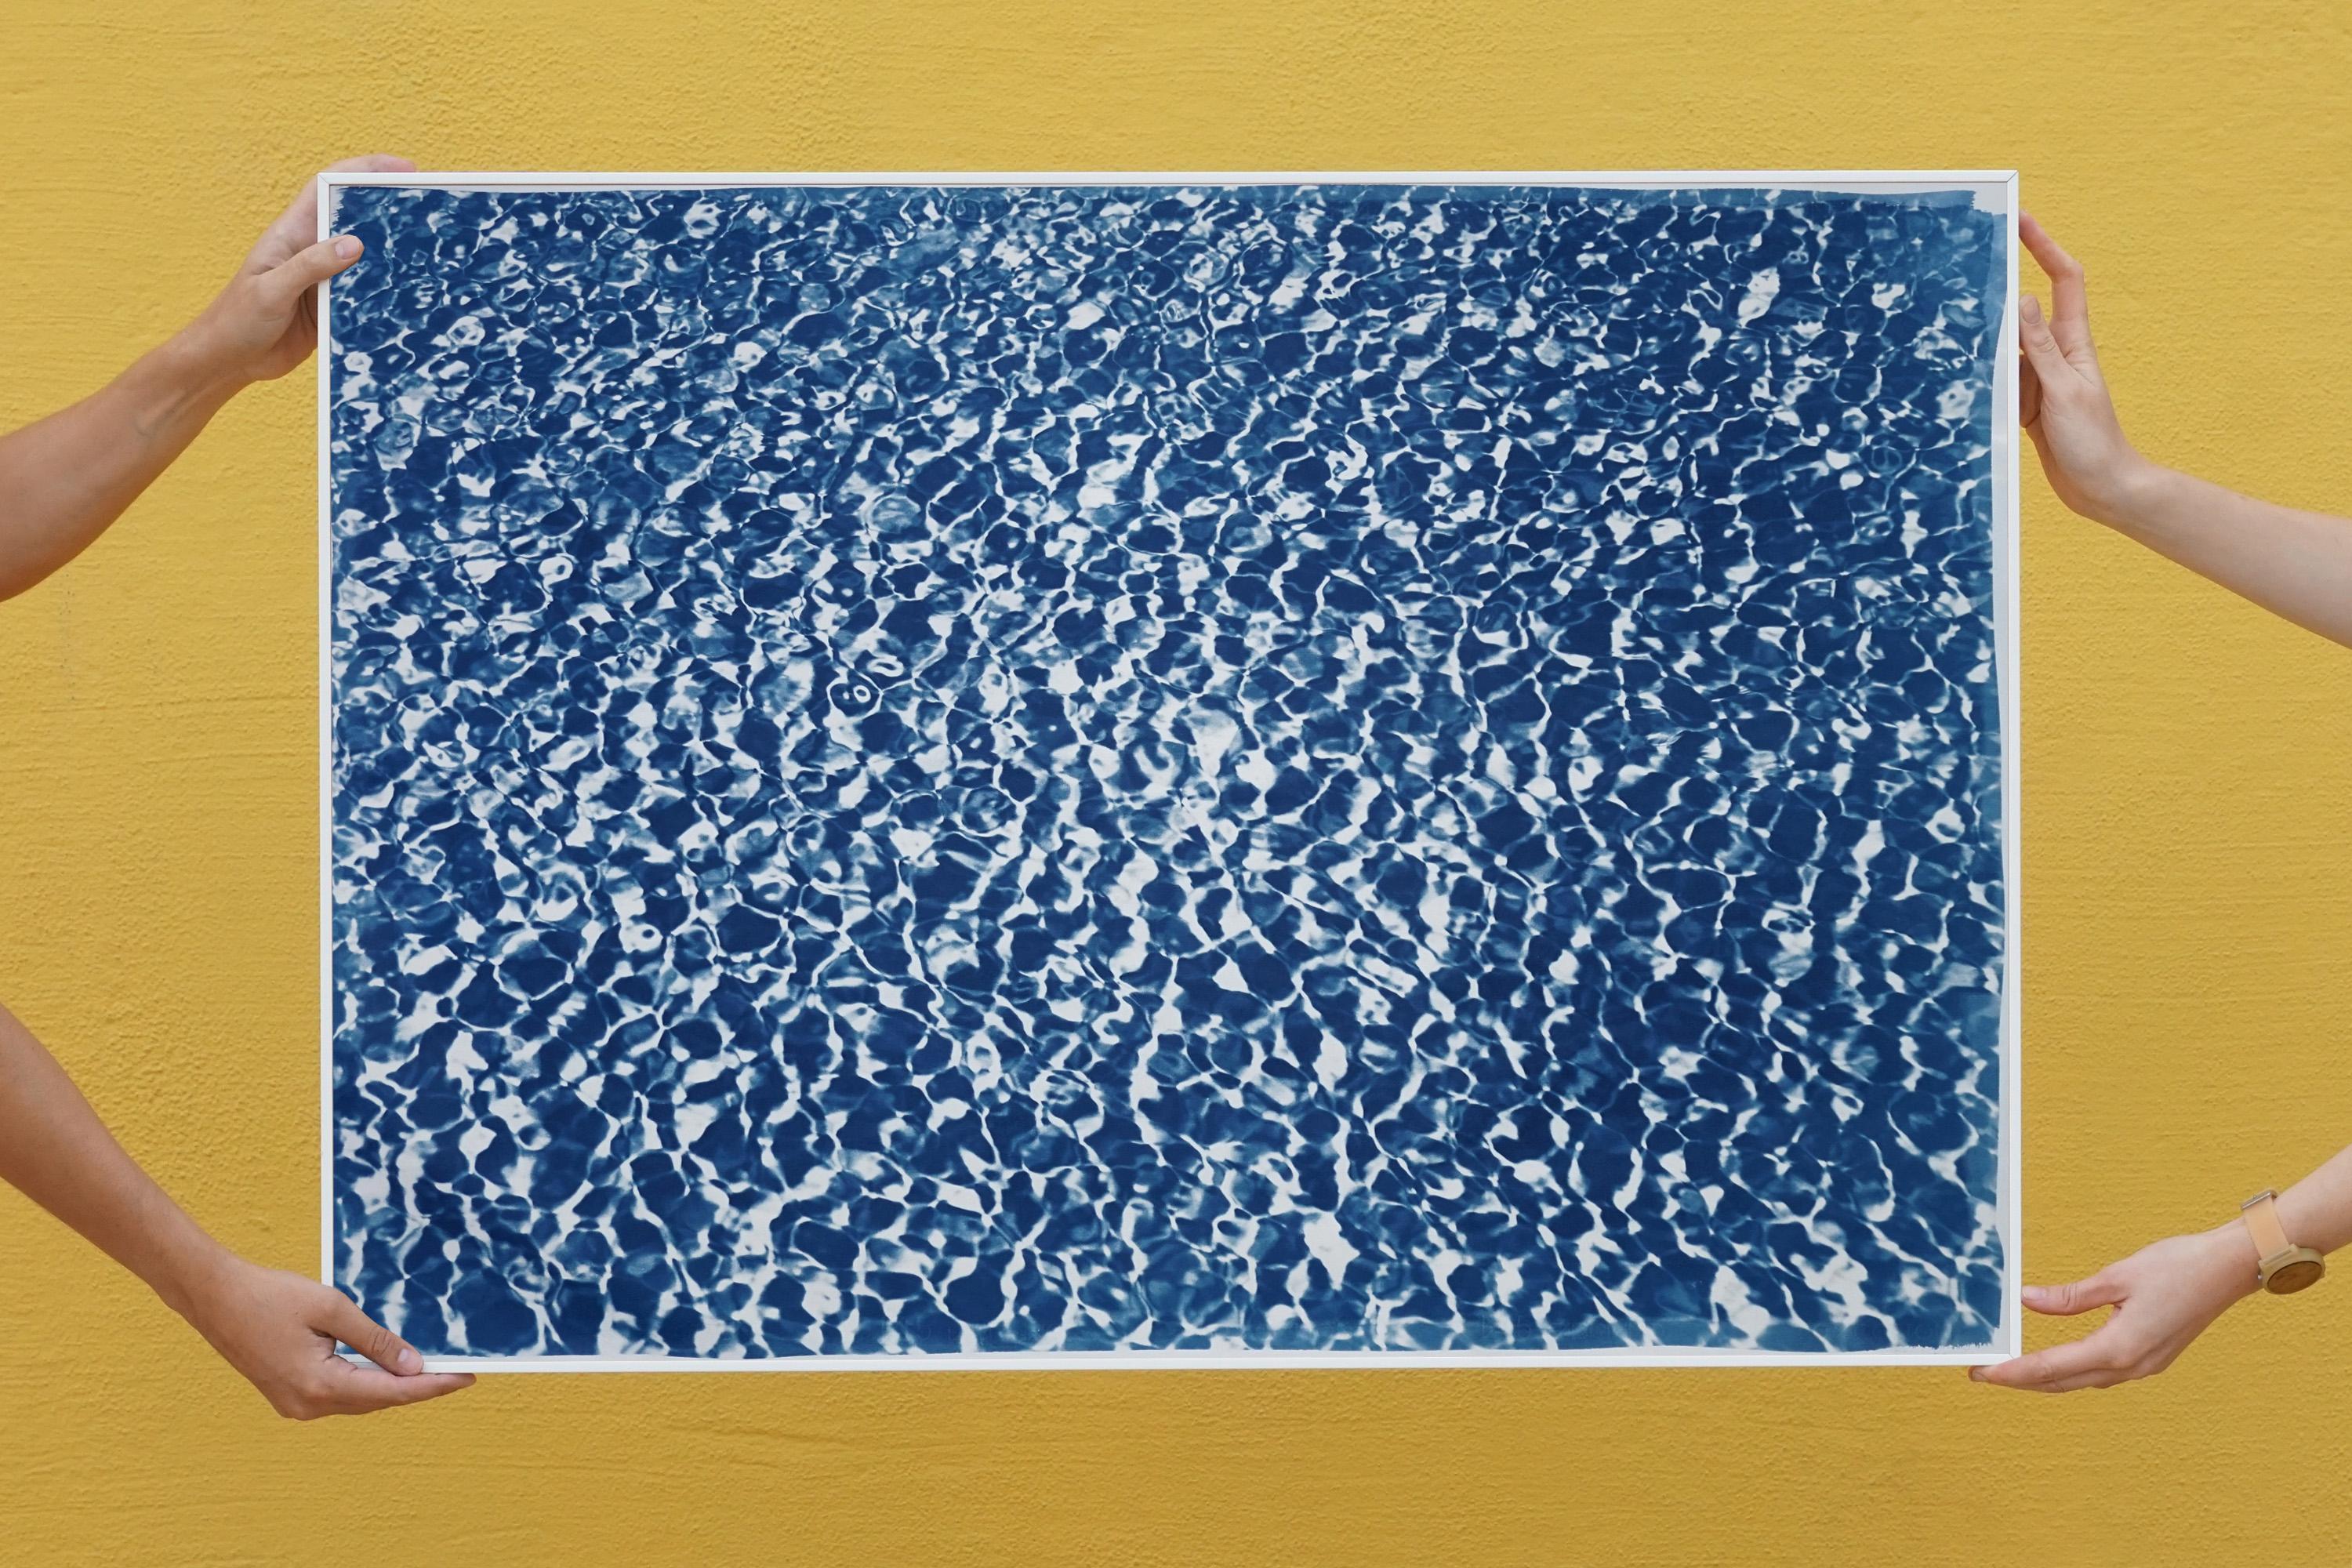 Infinity Pool Water Reflections, Blue & White Pattern, Handmade Cyanotype Print 7